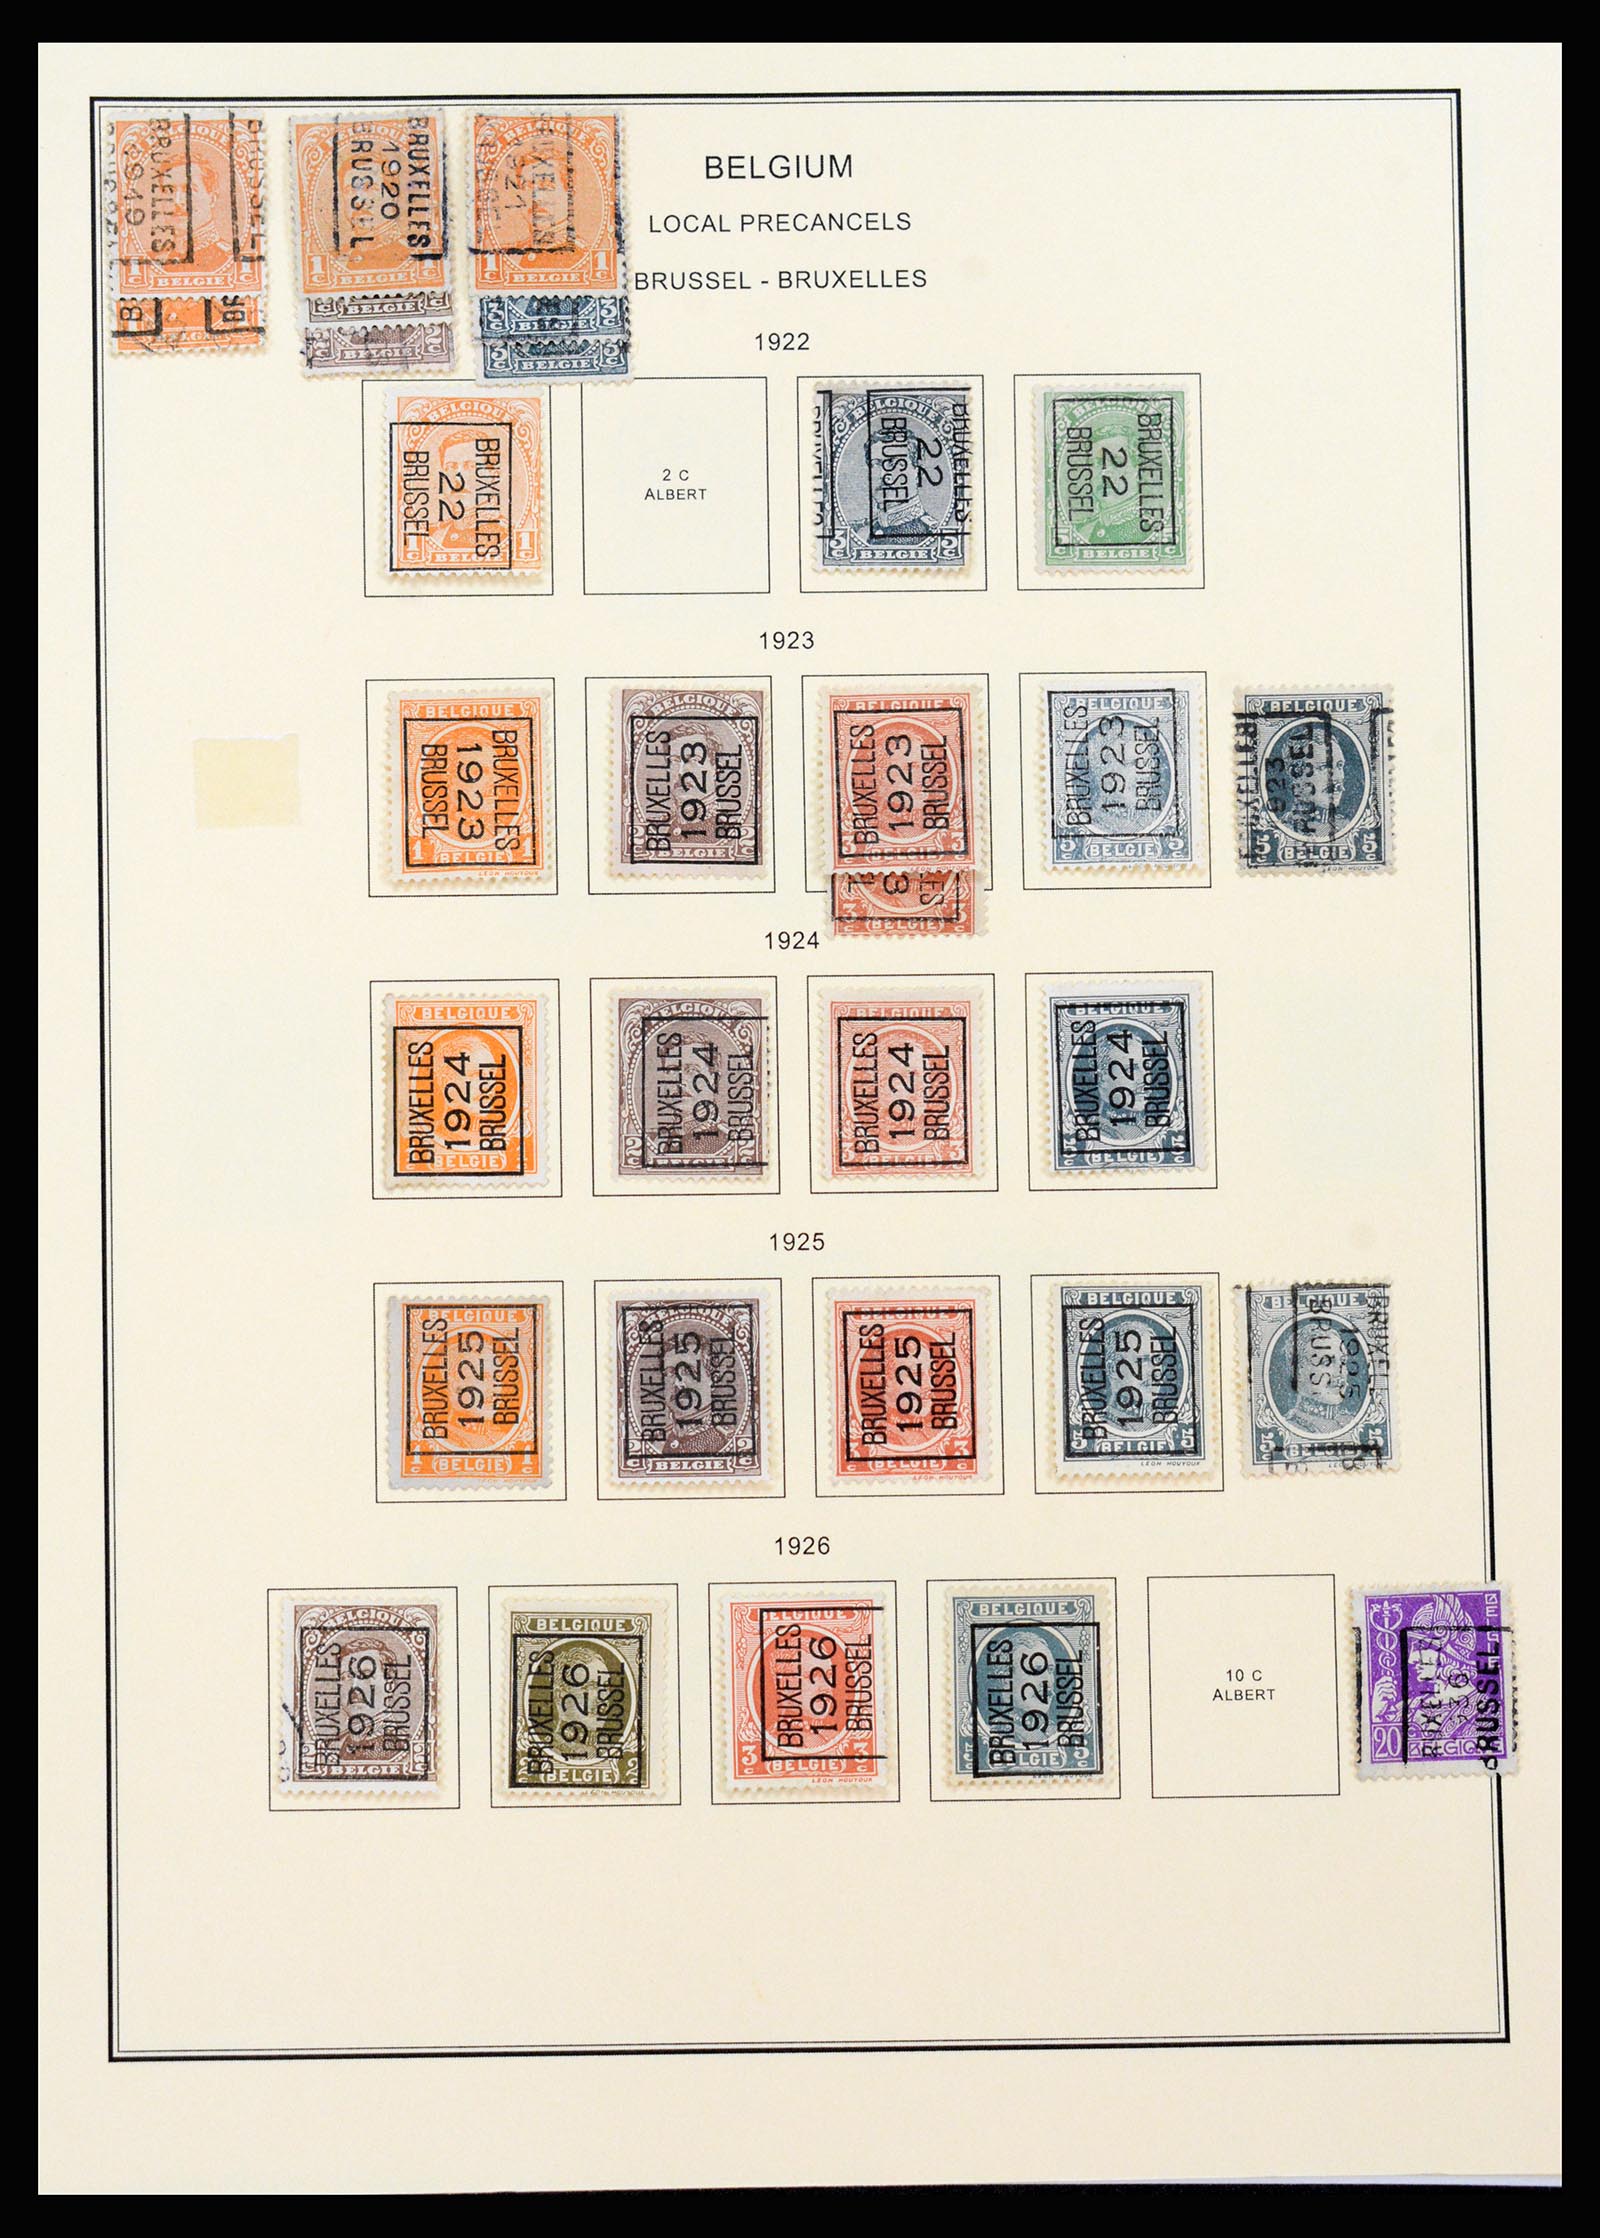 37240 372 - Stamp collection 37240 Belgium 1849-1996.